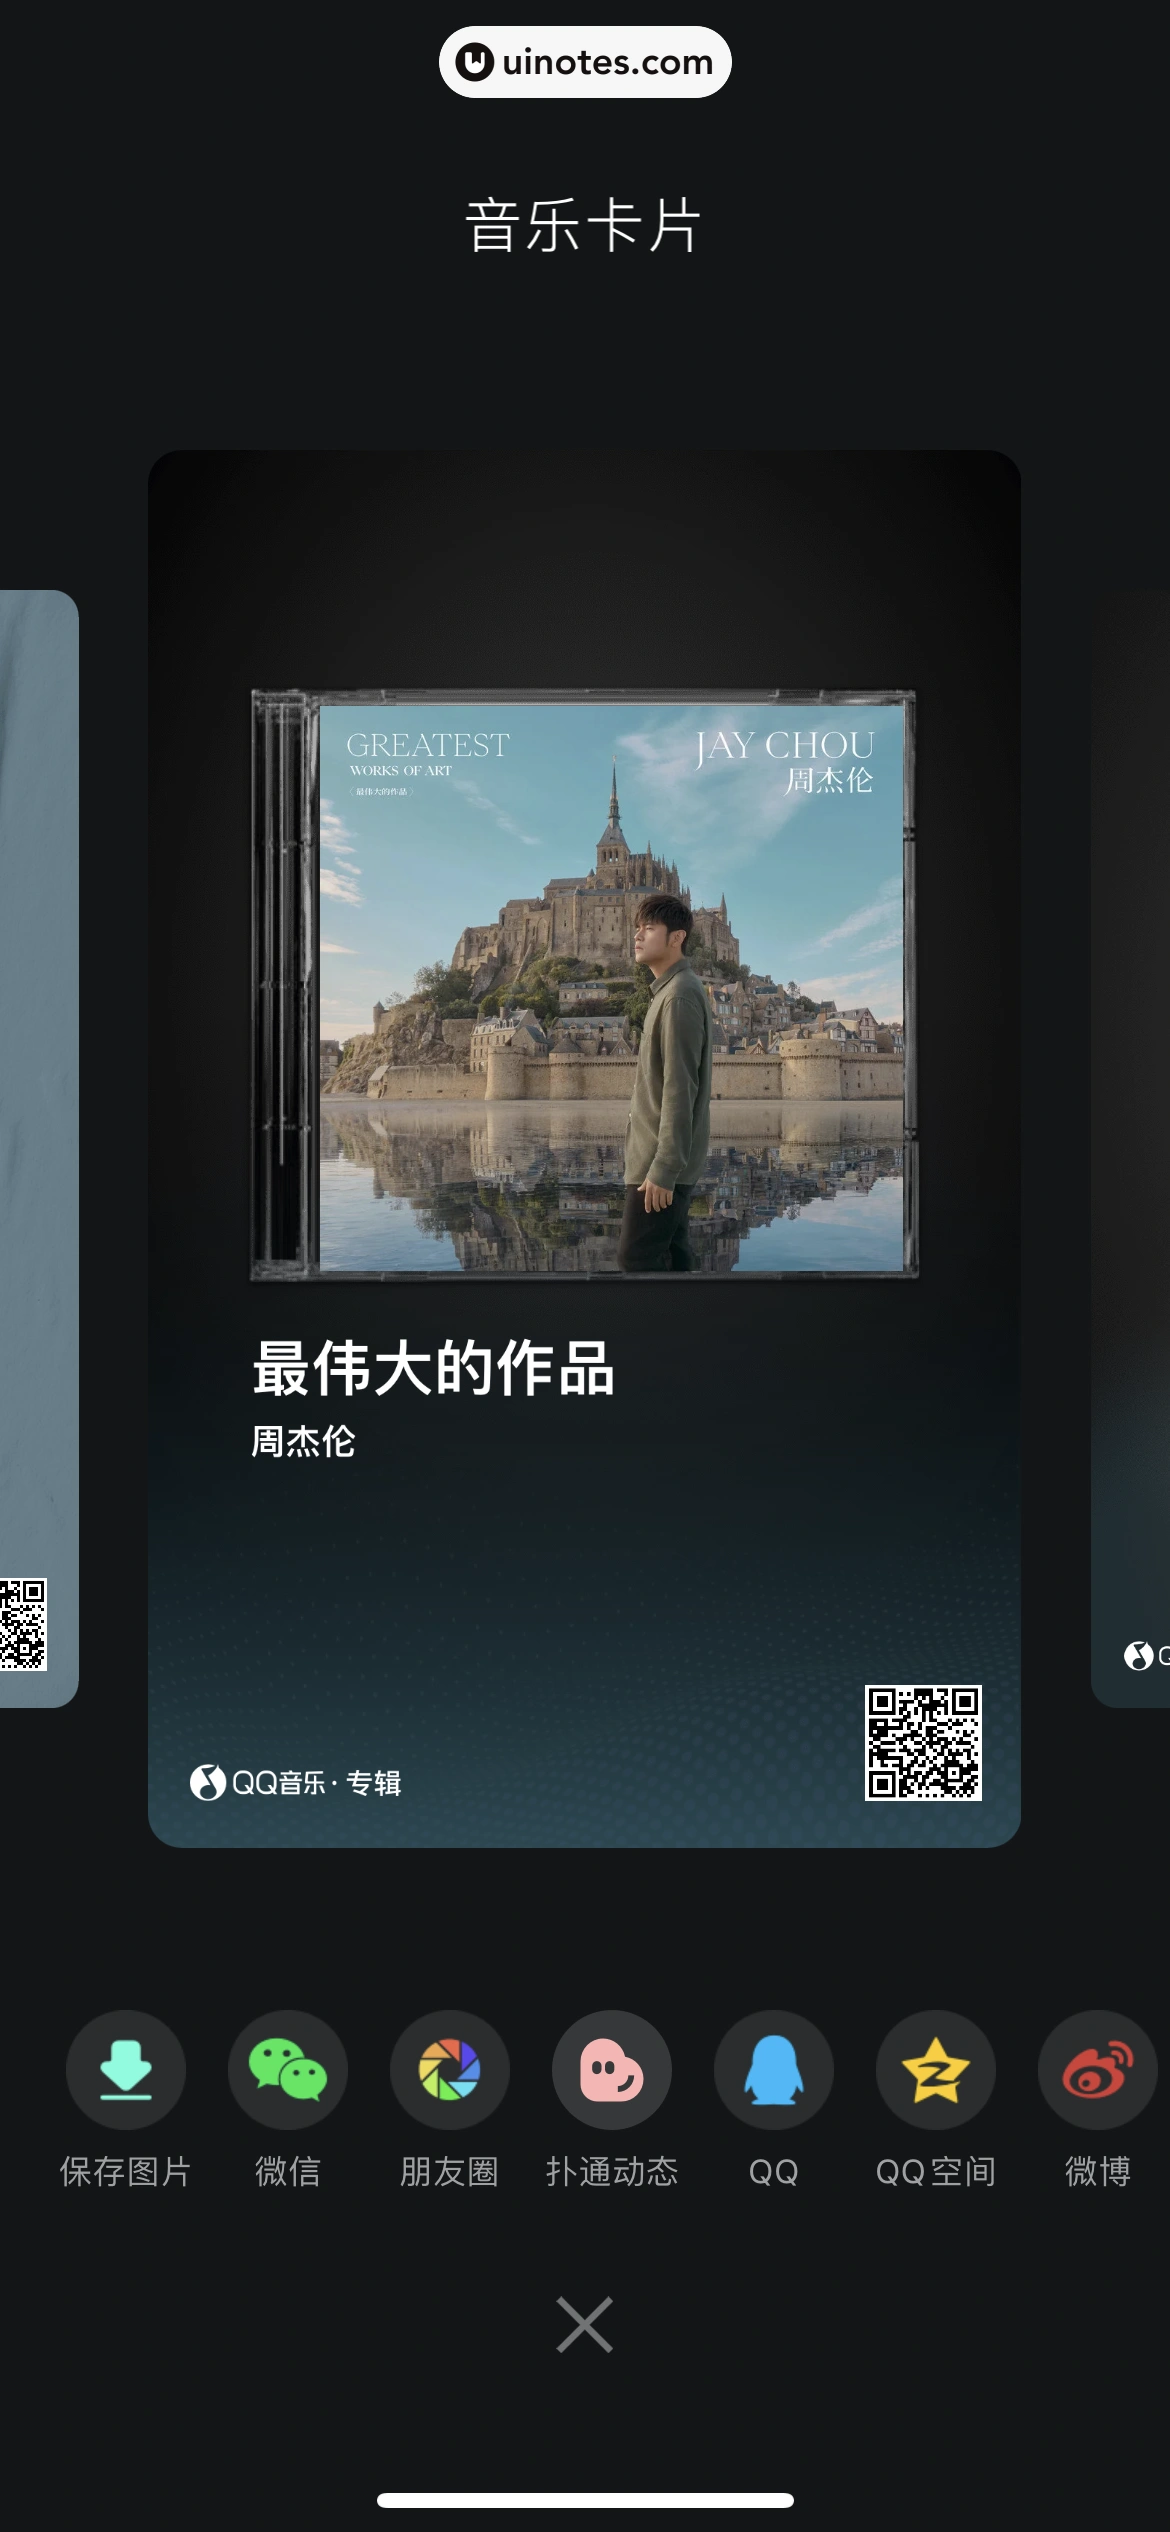 QQ音乐 App 截图 063 - UI Notes